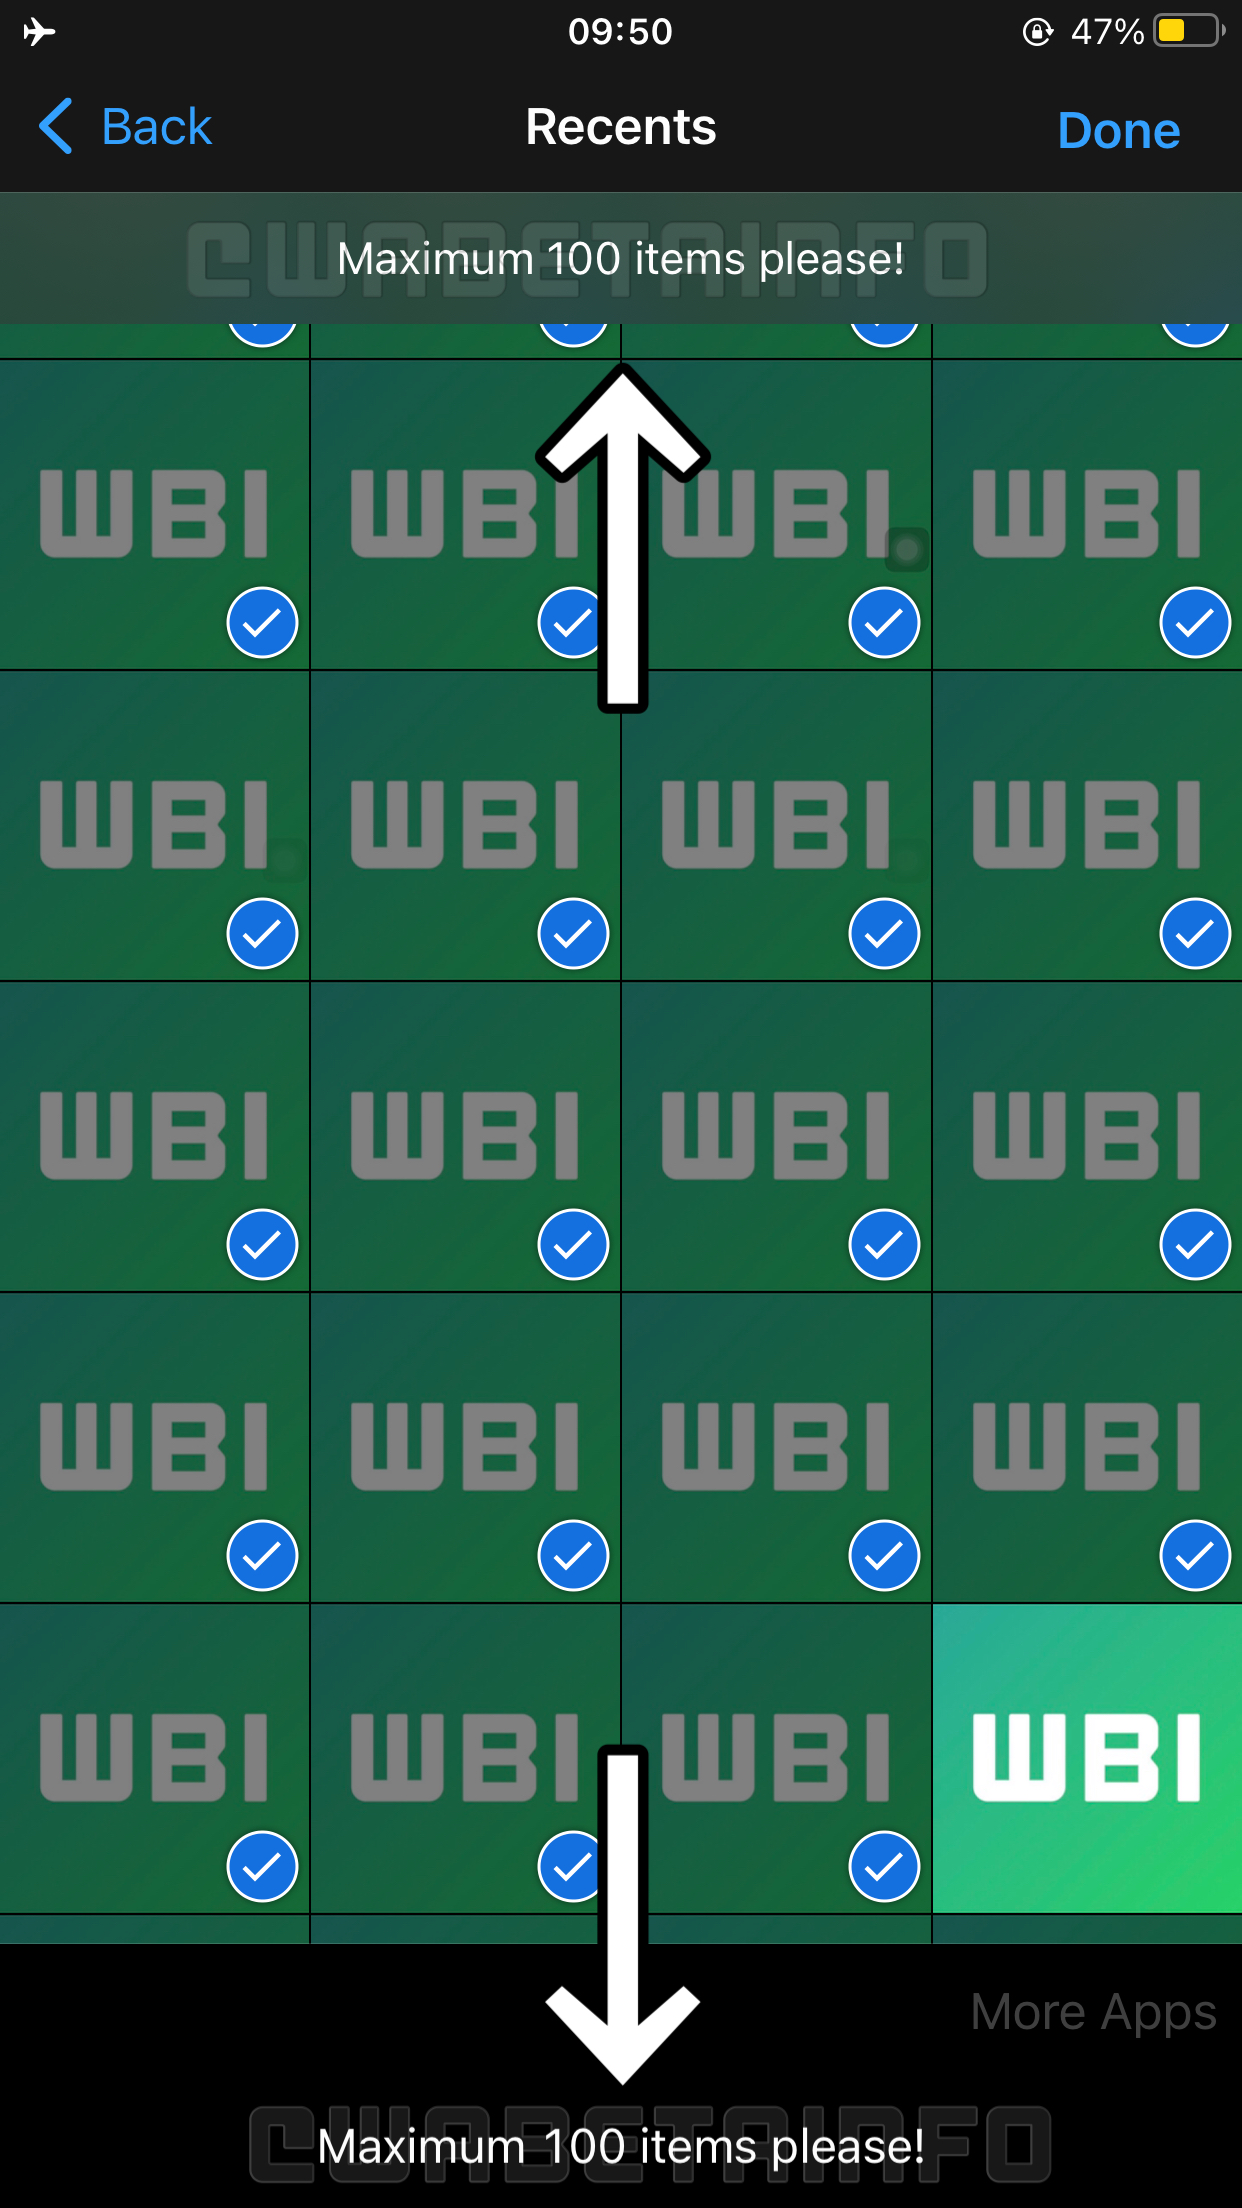 WhatsApp Beta per iOS 23.3.0.75 condivisione 100 media